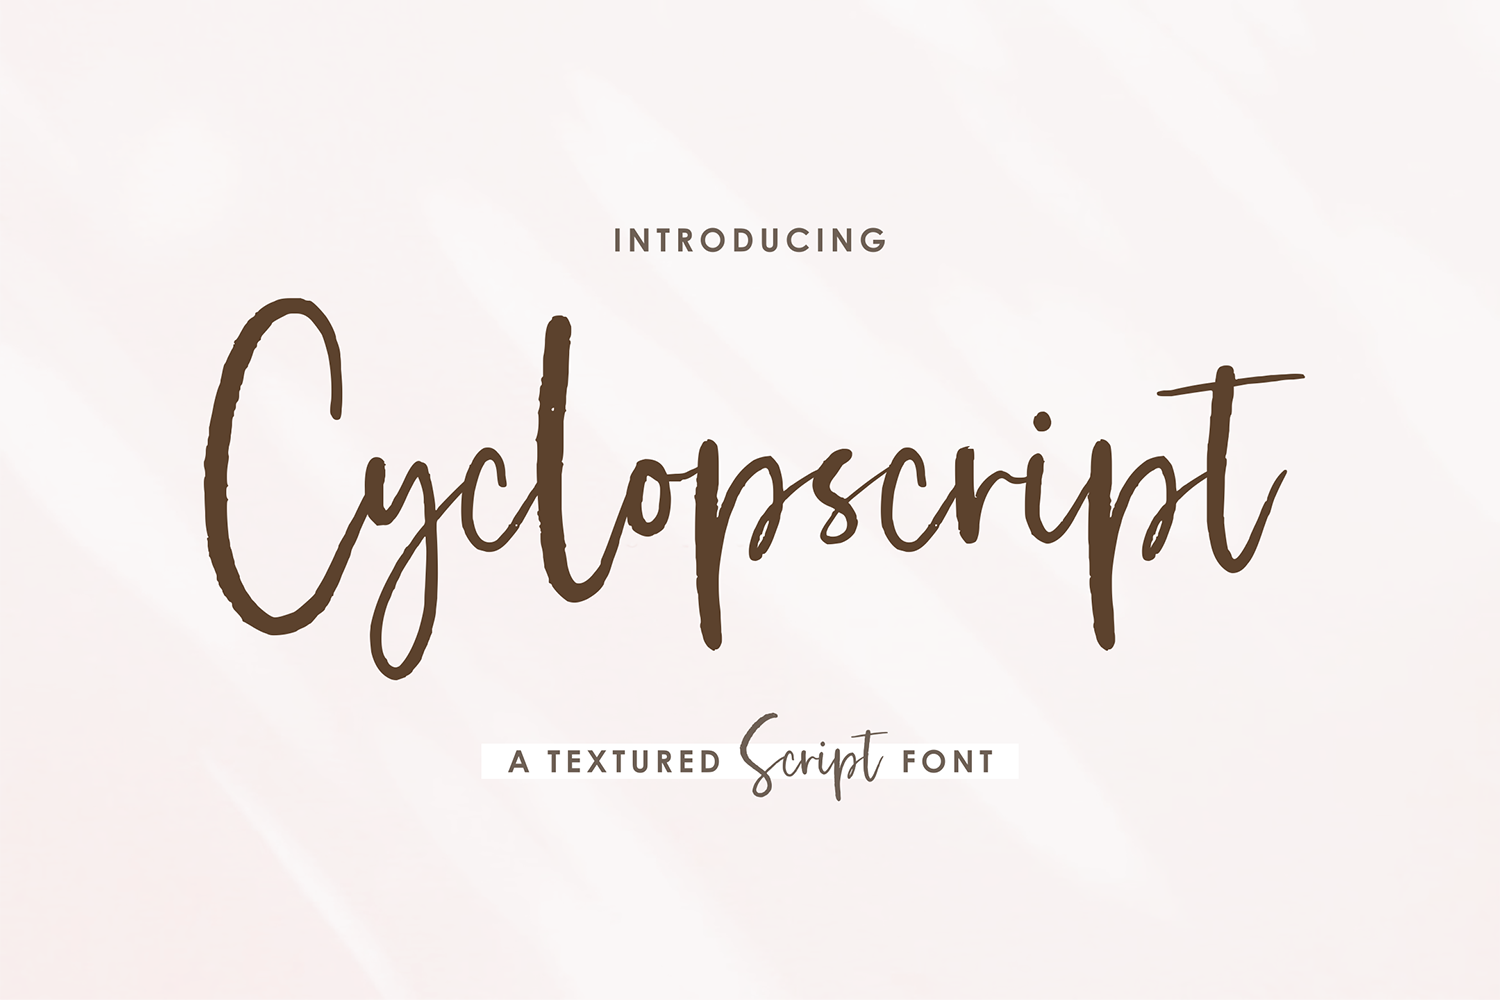 Cyclopscript Free Font